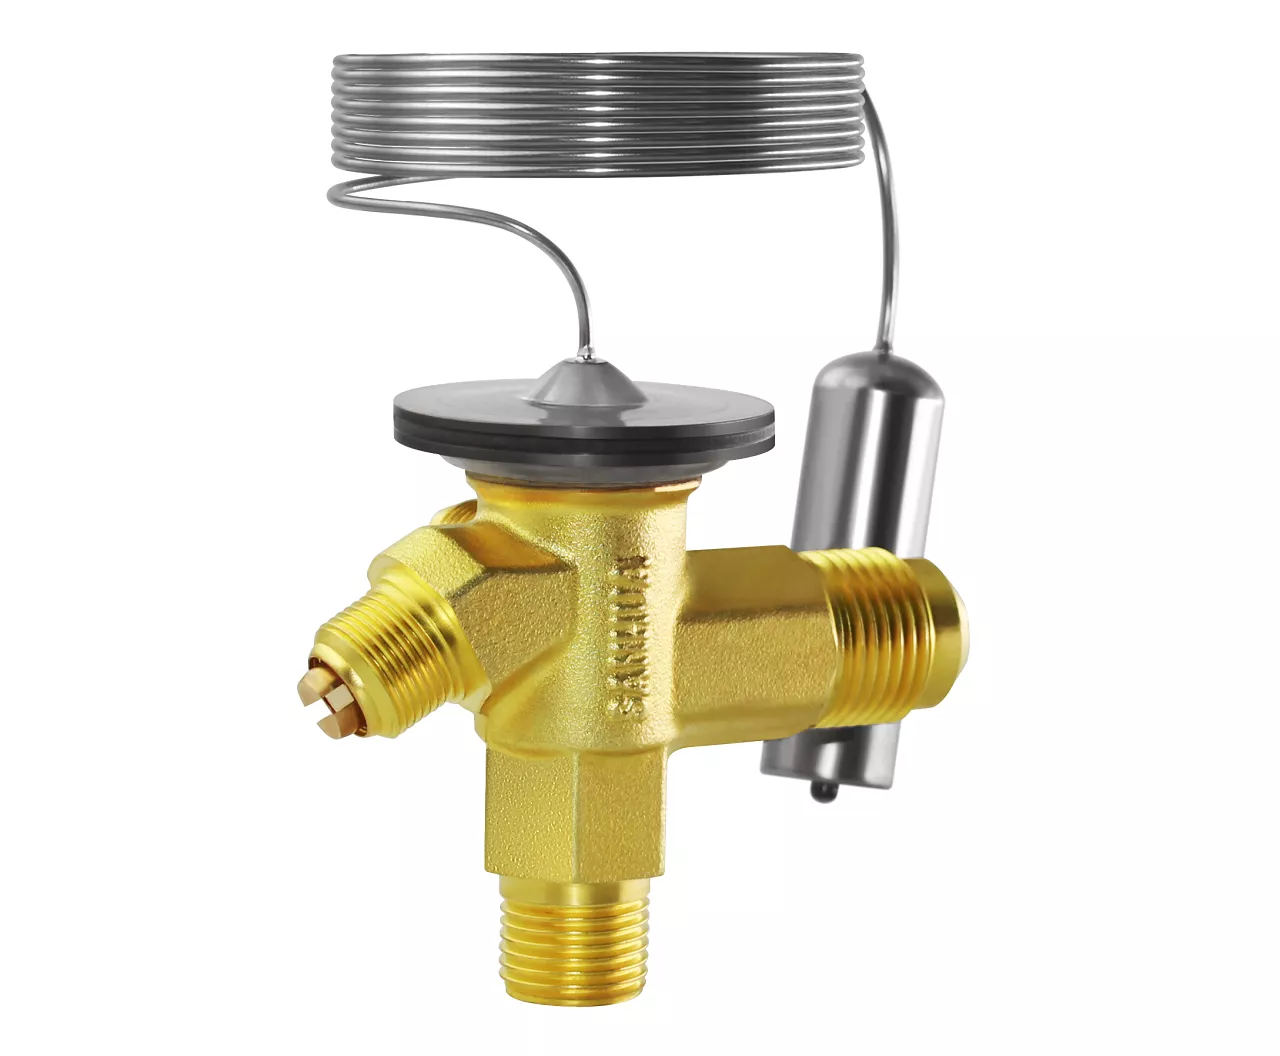 Sanhua's new thermostatic expansion valves RFKH20 series